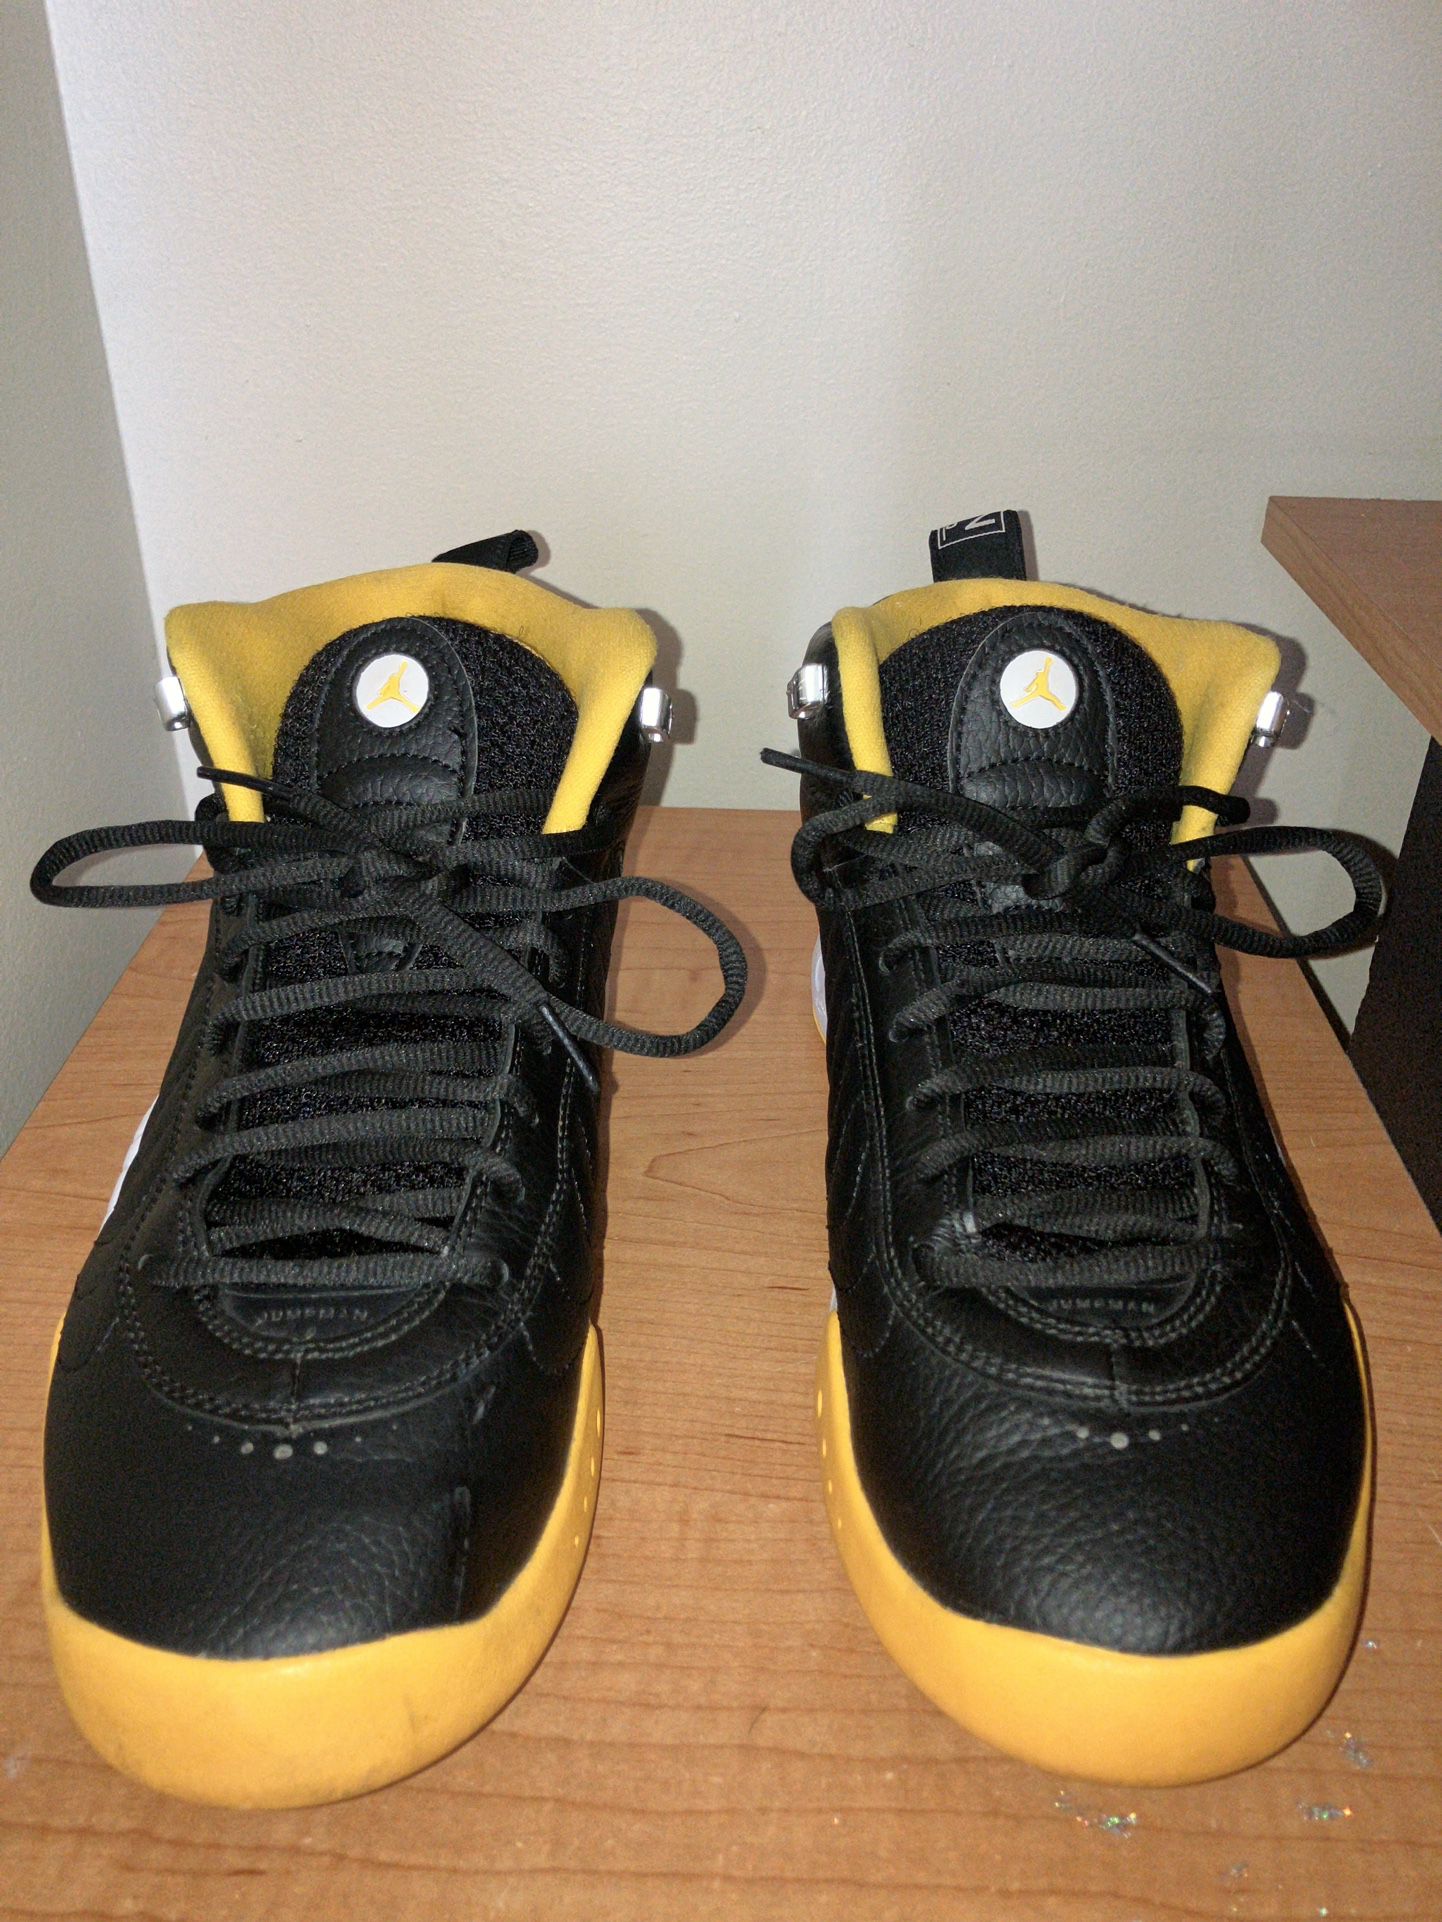 Nike Men's Jordan Jumpman Pro Basketball Shoes